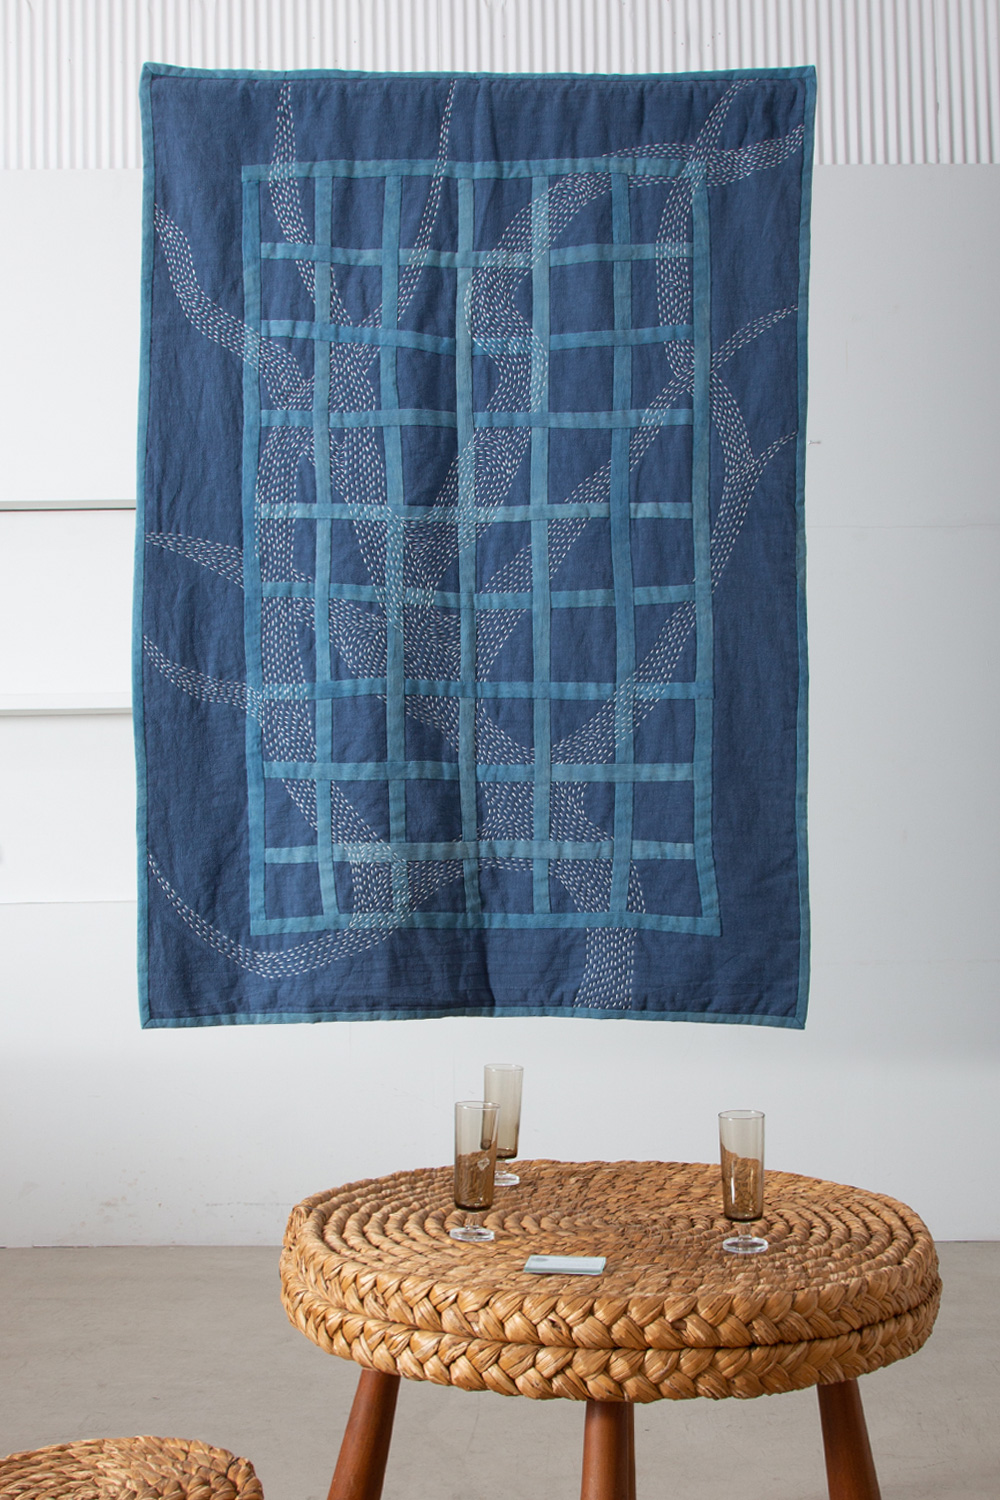 Tapestry Type B #01 in Indigo , Hand Stitch and Quilting by Luna Mara